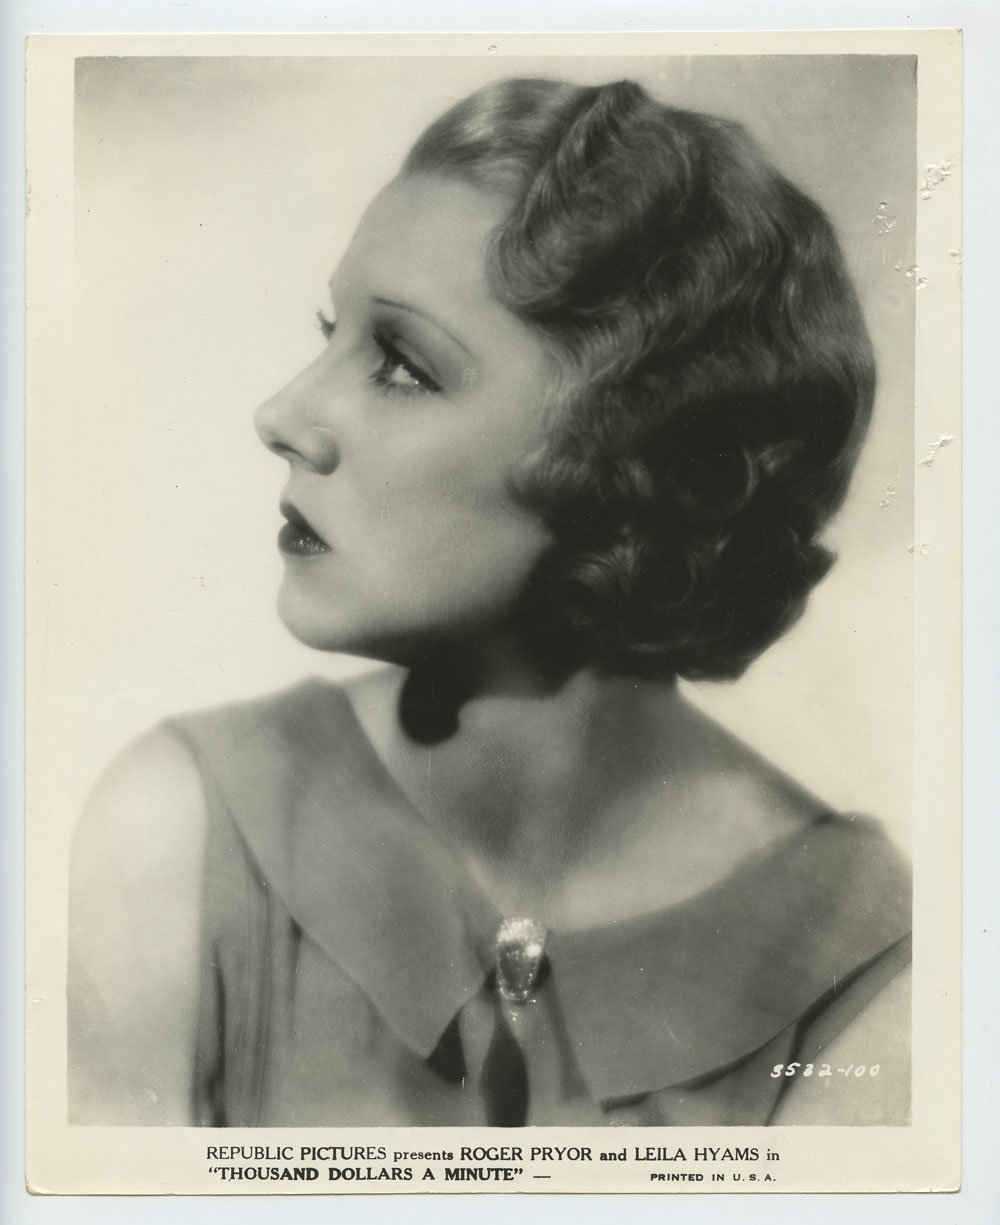 Leila Hyams Photo 1930 1,000 Dollars a Minute Original Vintage